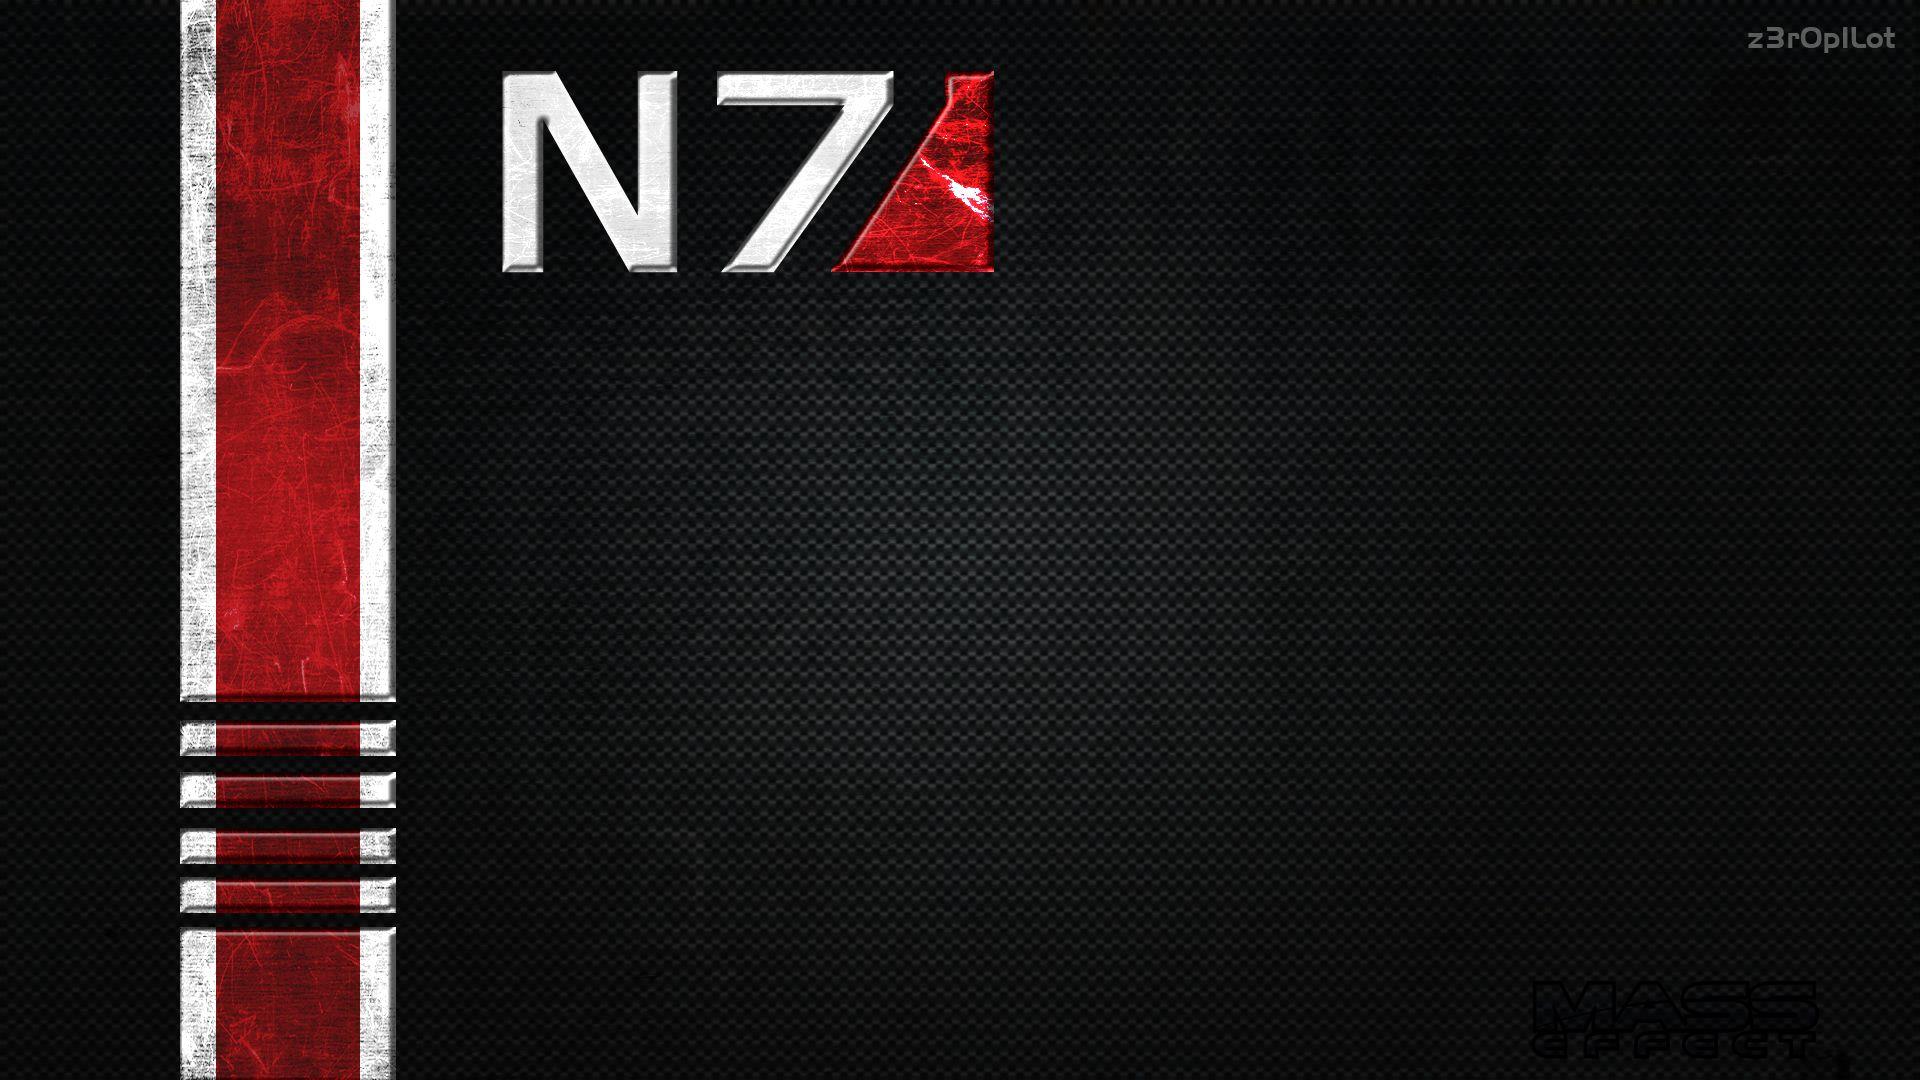 n7 wallpaper dark